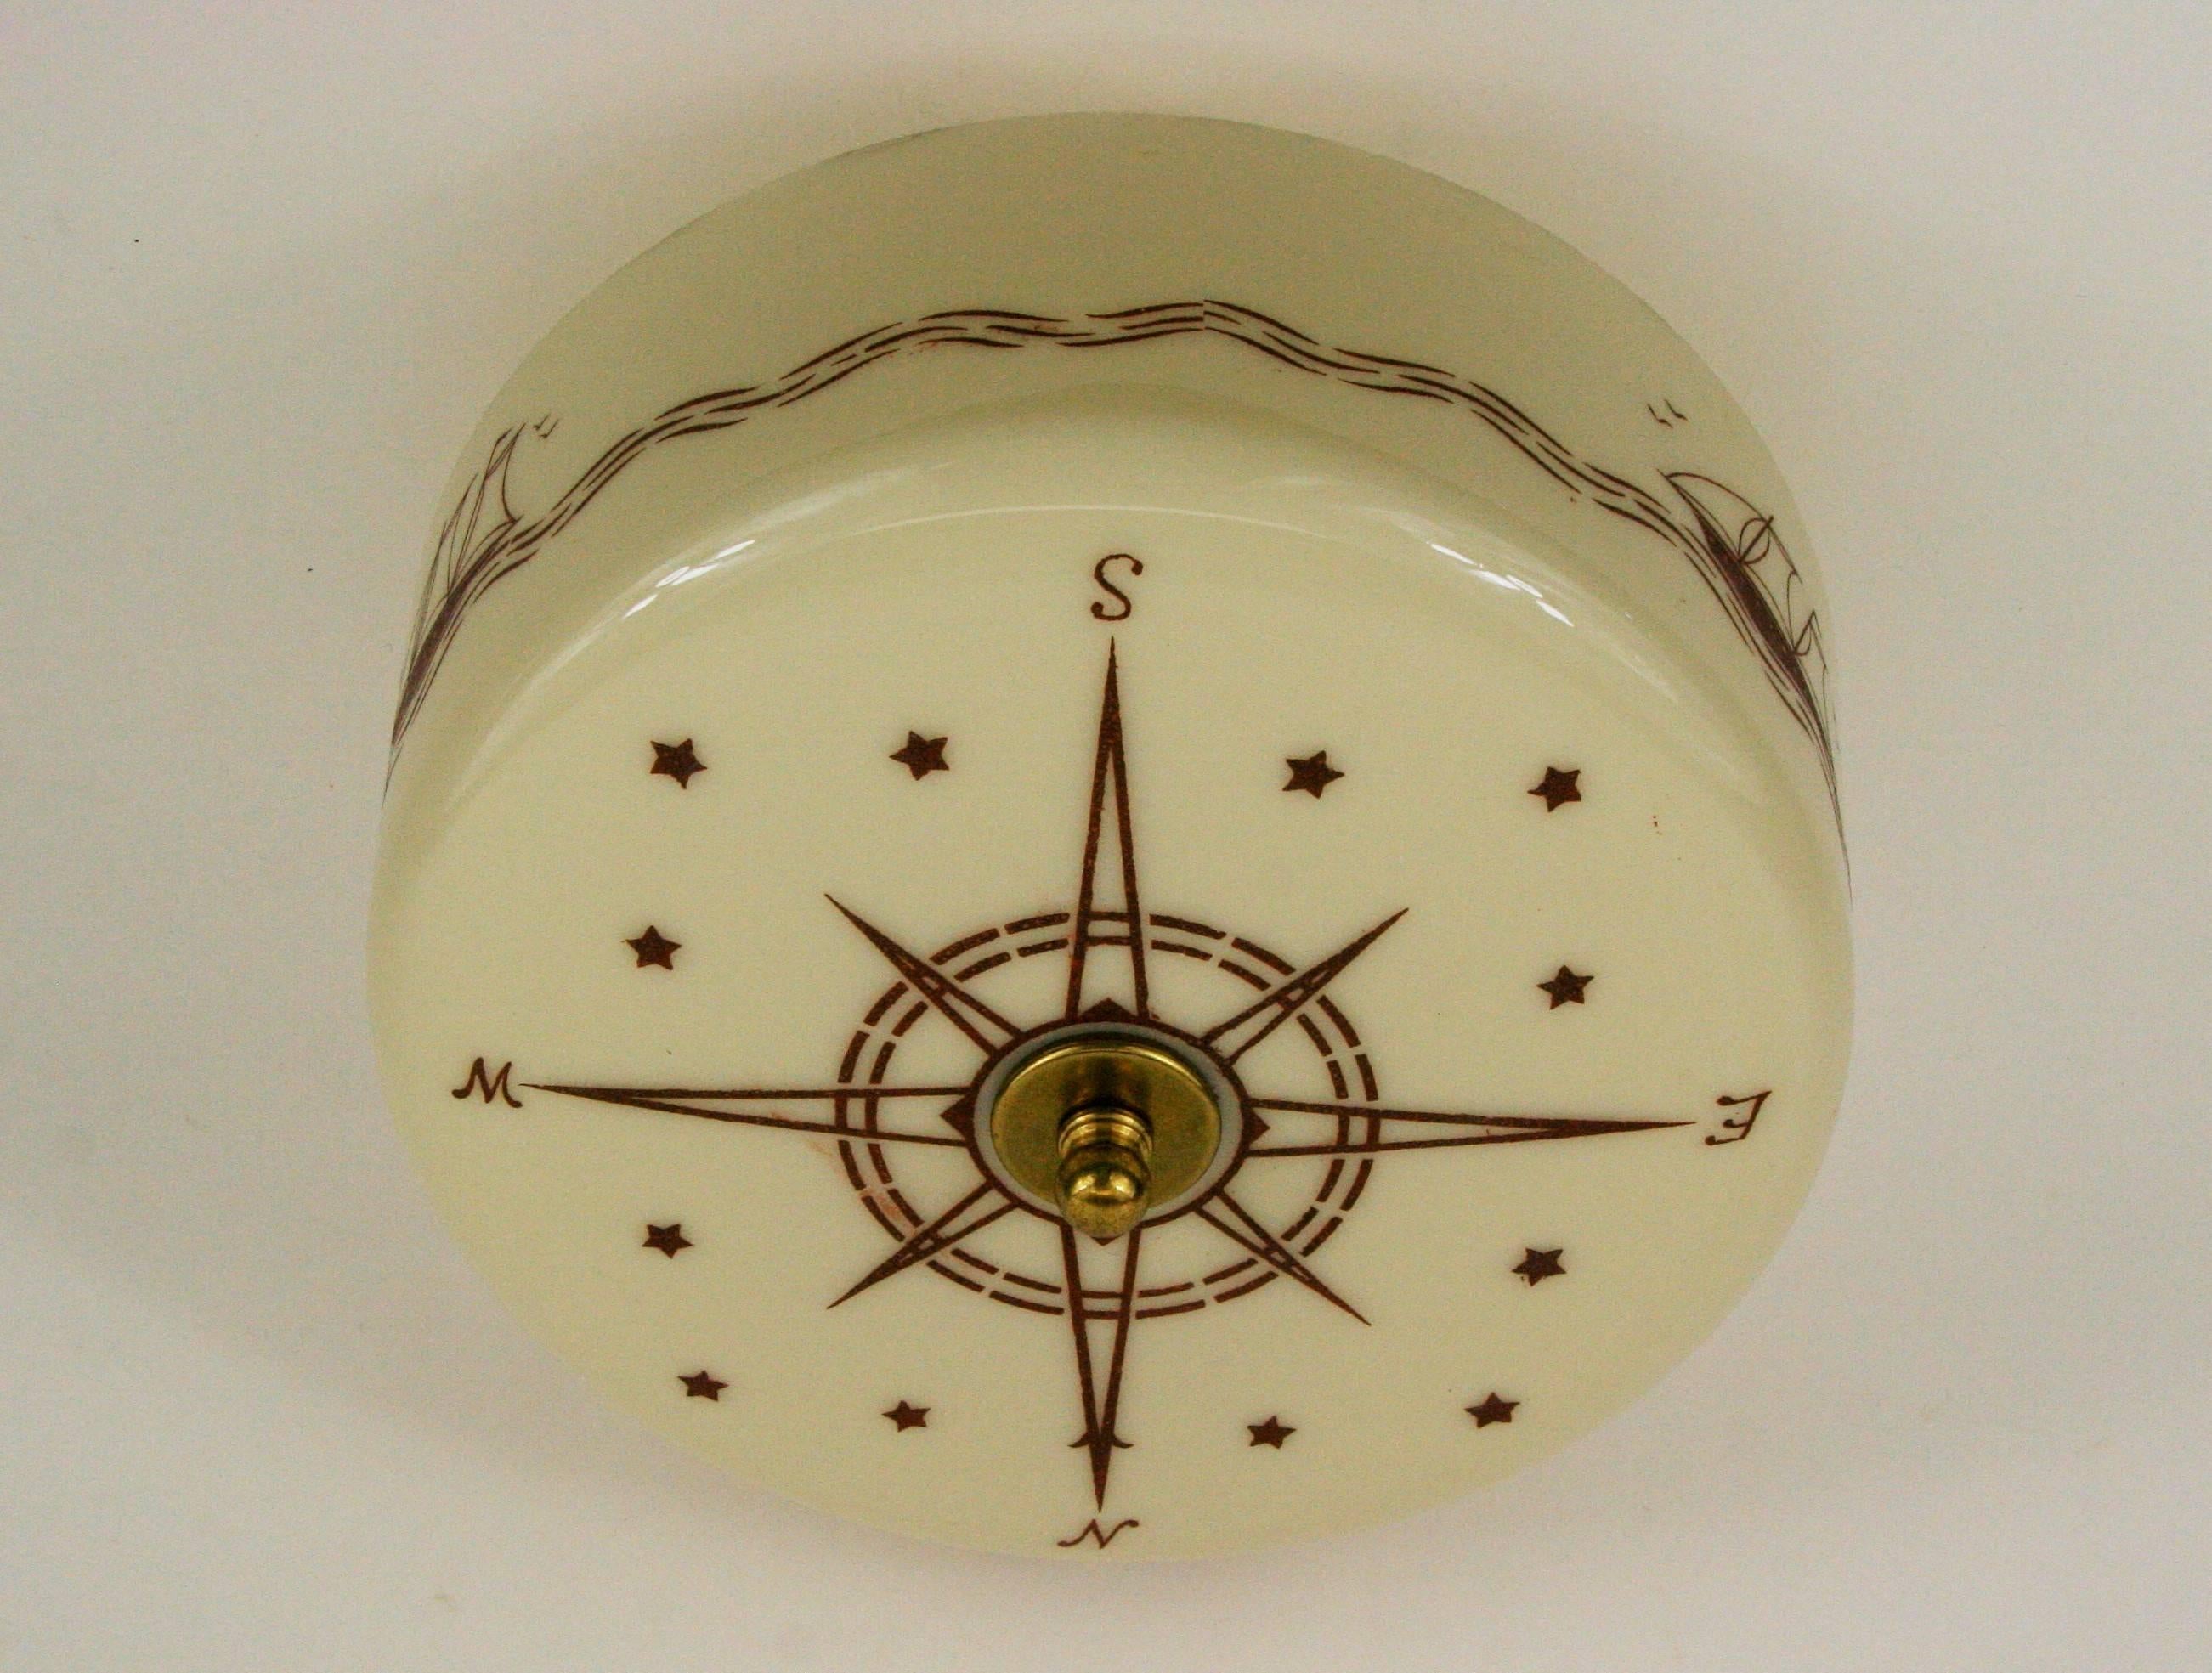 1-5000a, a ships wheel and compass nautical glass semi flush mount. Two internal 60 watt Edison base bulbs. Newly rewired.